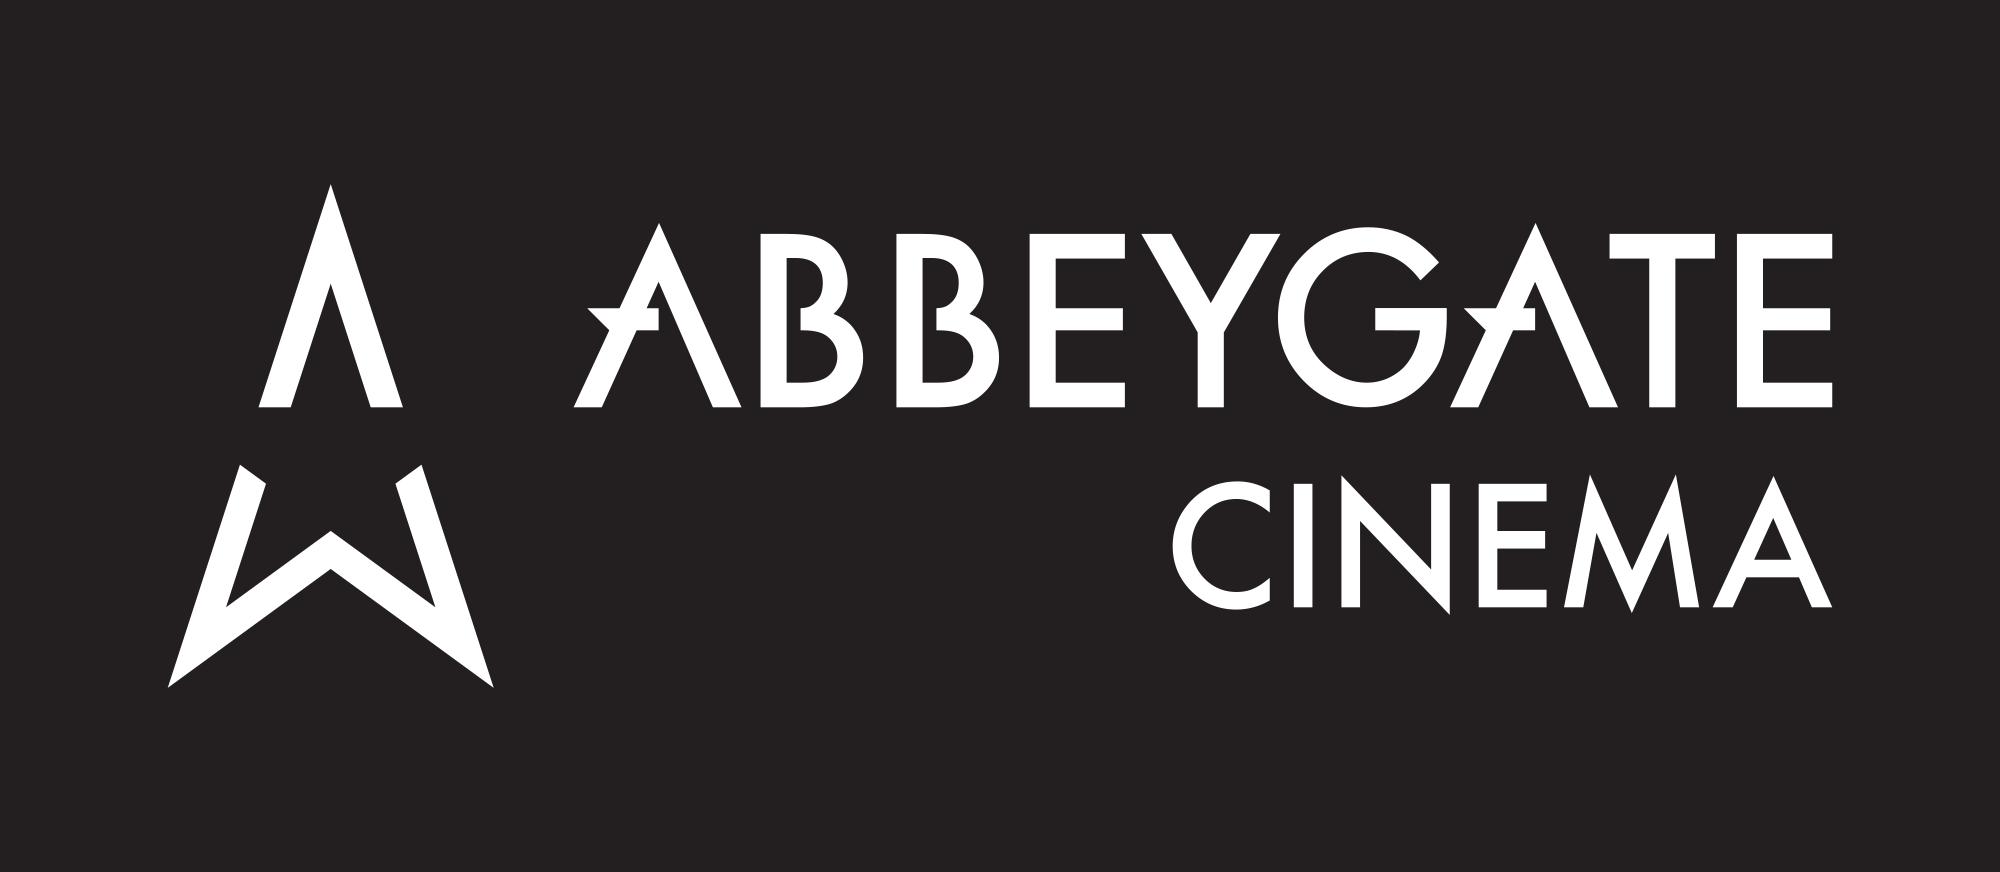 Abbeygate Cinema's logo